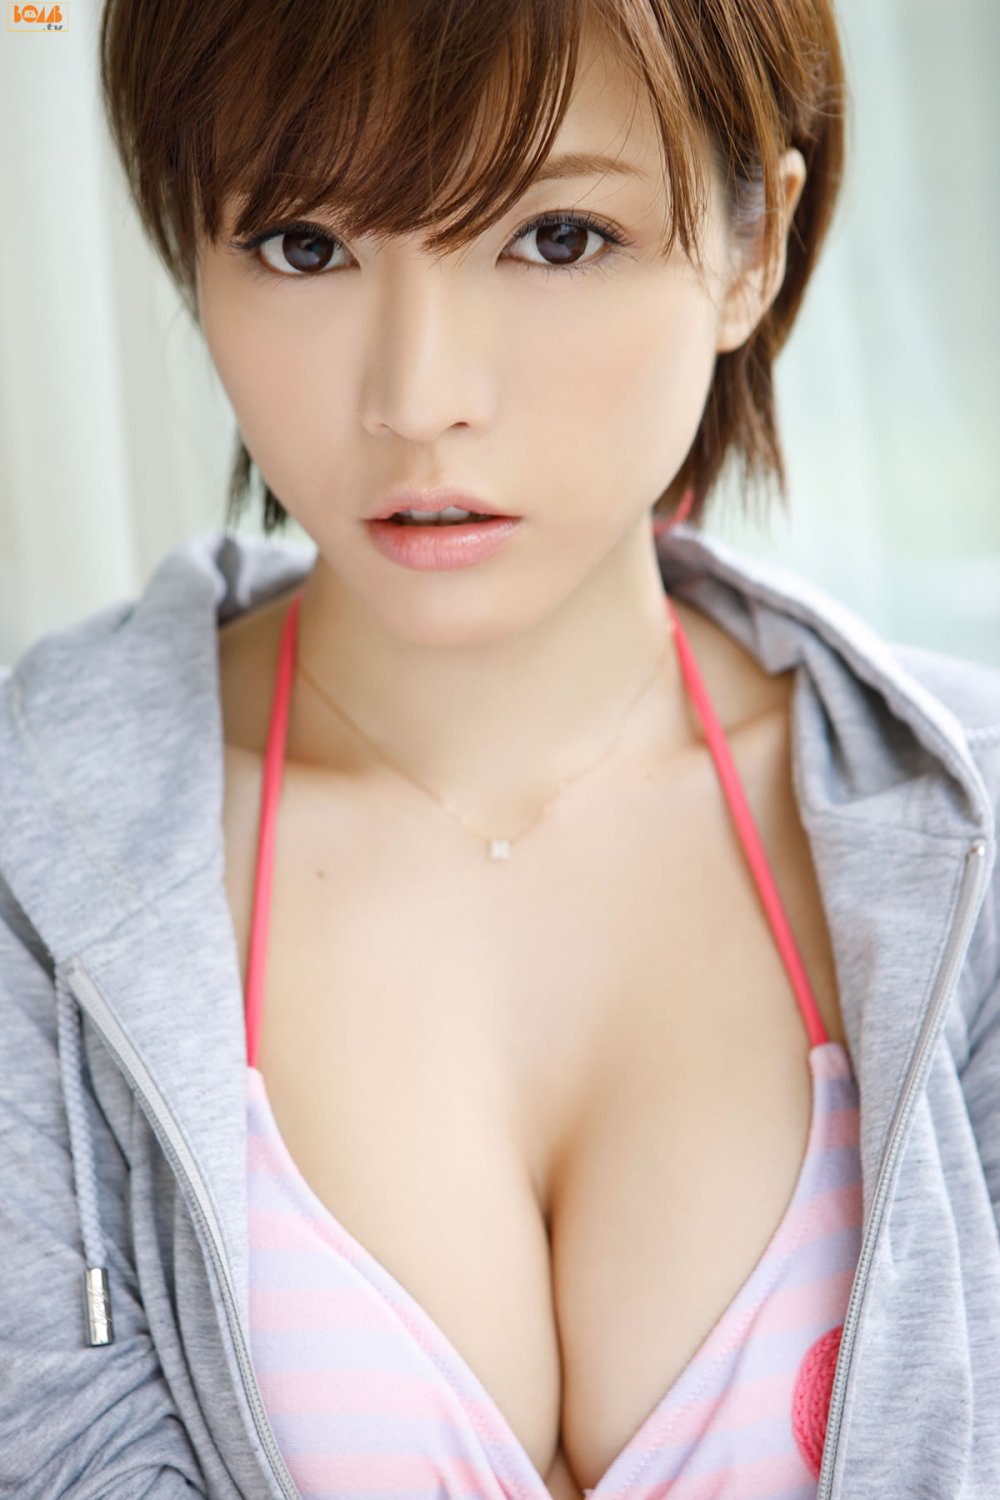 Yumiko Shaku Sexy and Hottest Photos , Latest Pics